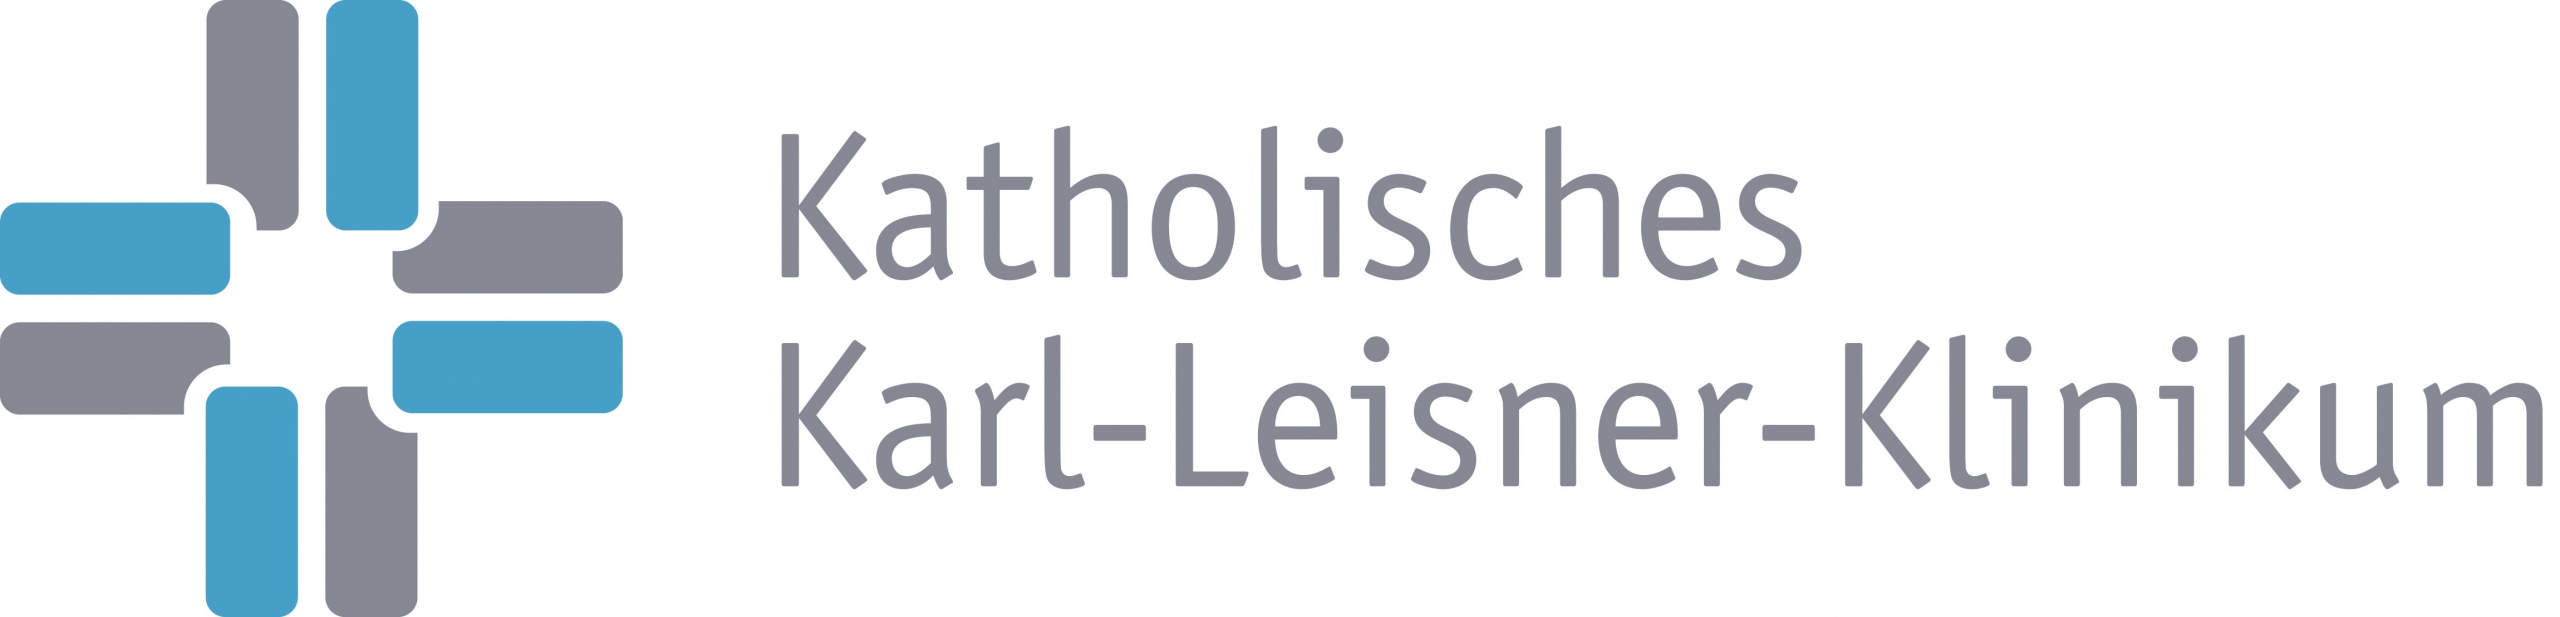 Logo Karl-Leisner-Klinikum mit Link